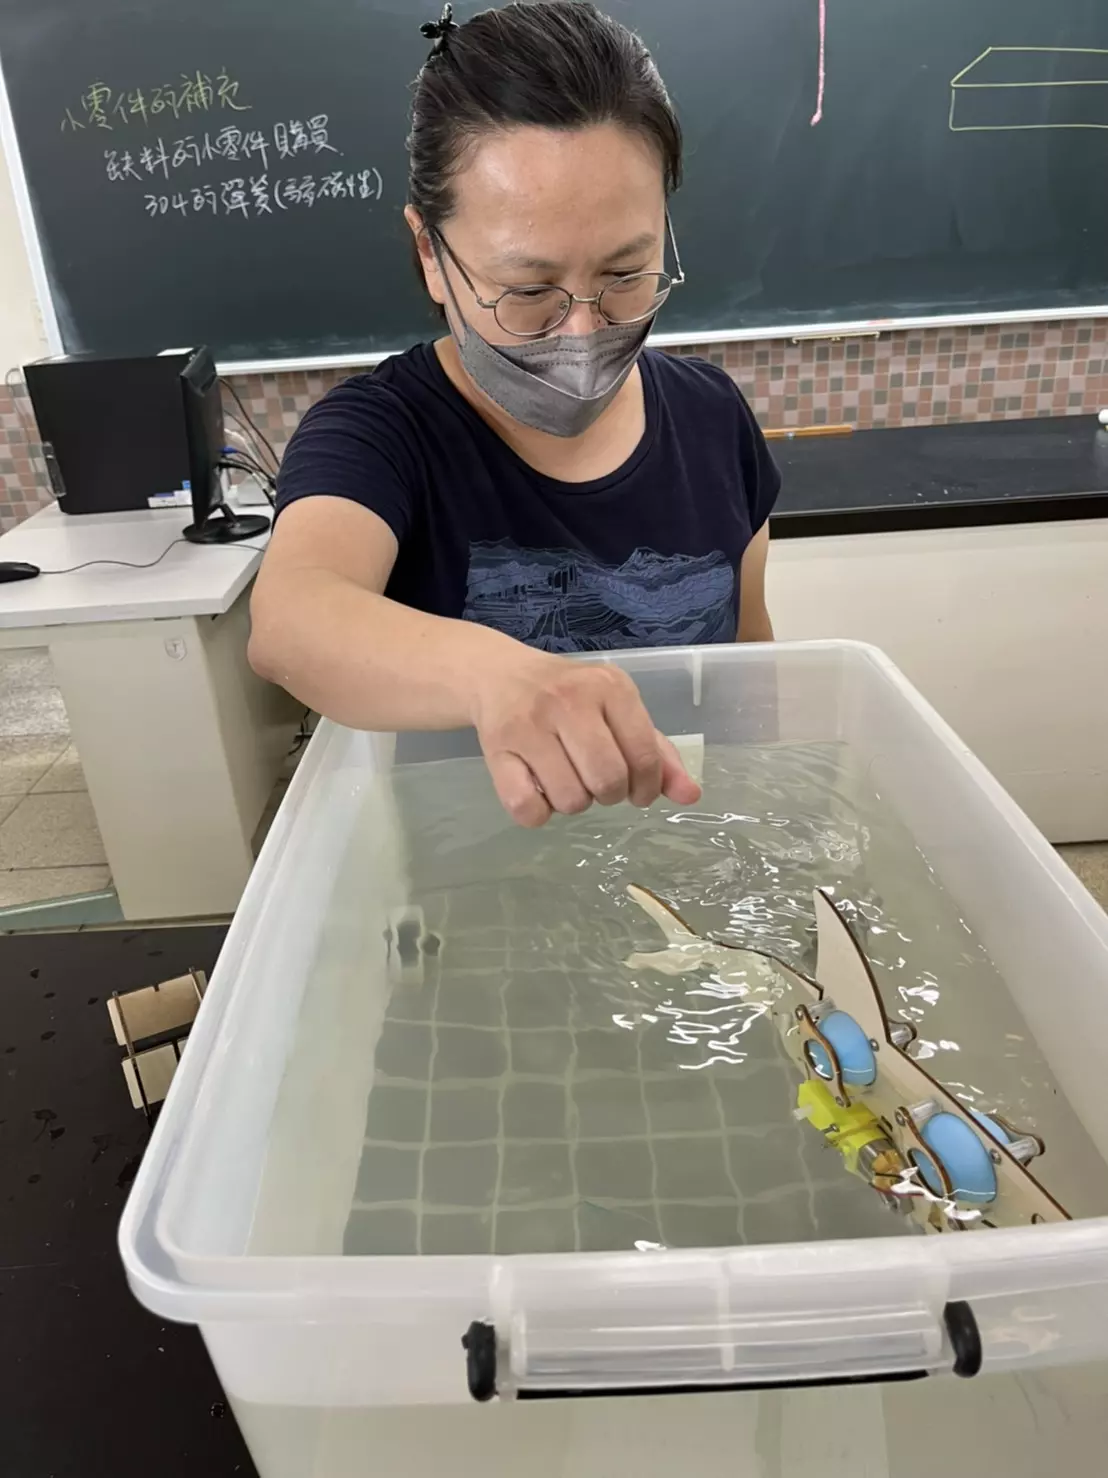 bionic-fish-assembly-and-sharing-taipei-municipal-nanhu-senior-high-school-4